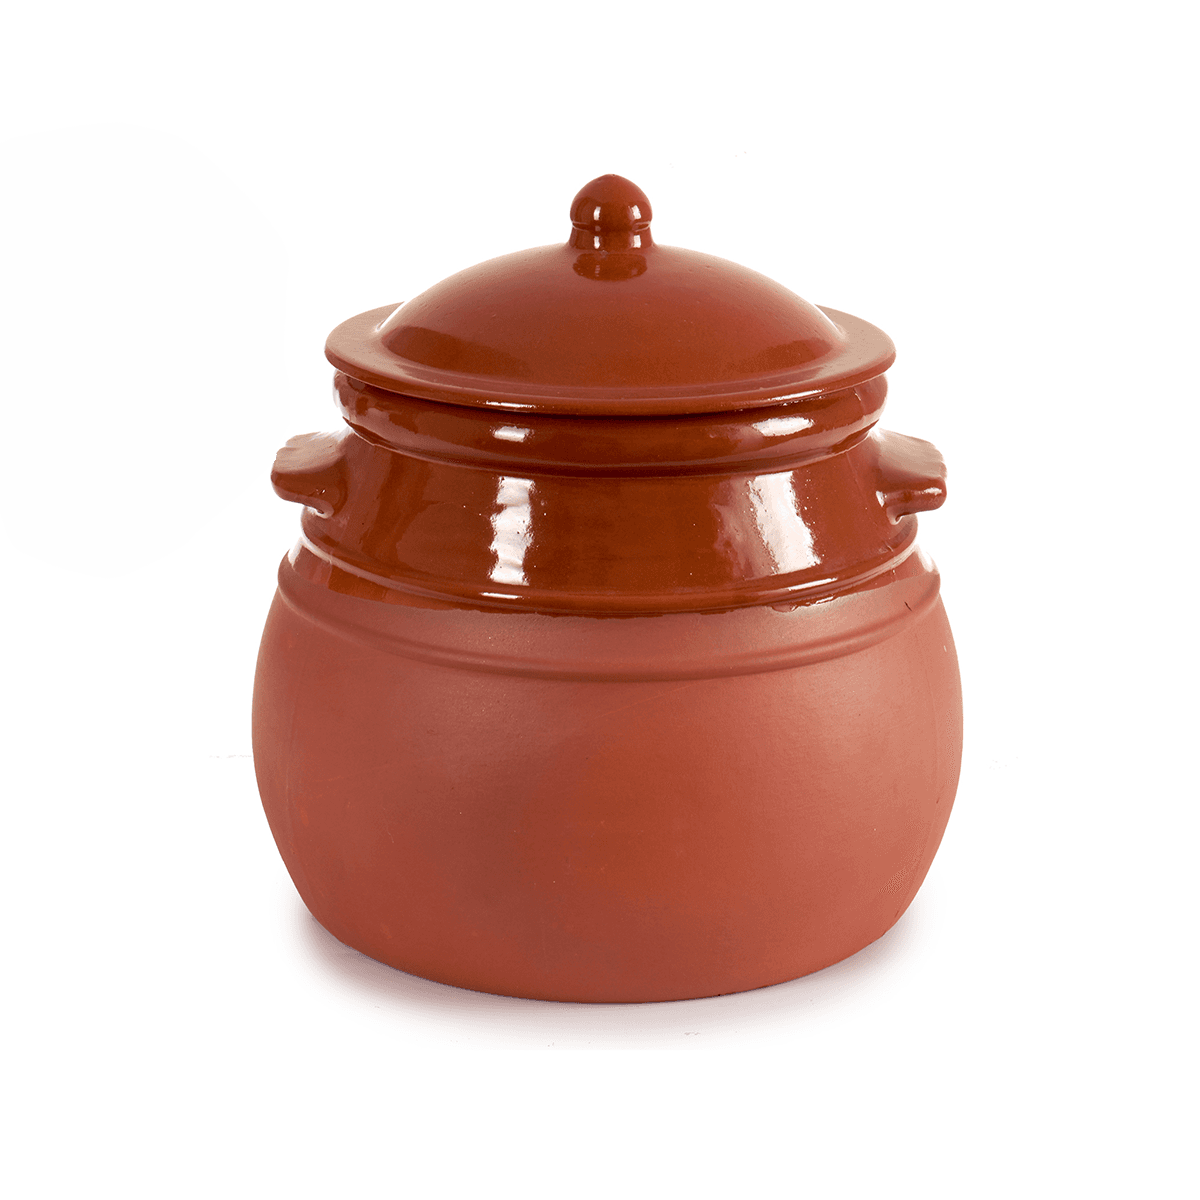 قدر طبخ فخار 4.5 لتر صناعة اسبانيا بني آرت ريجال Arte Regal Brown Clay Belly Cooking Pot